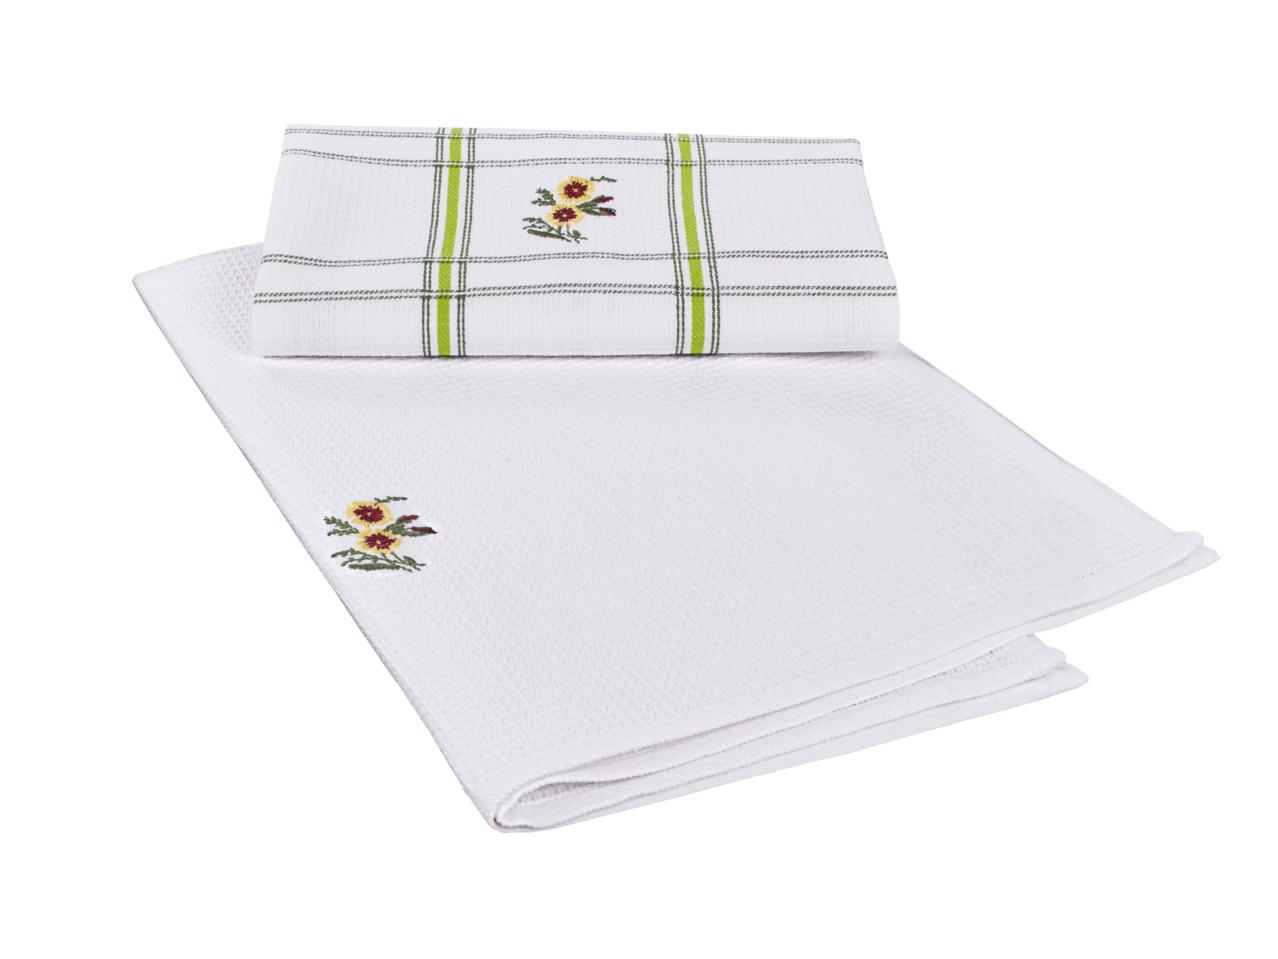 MERADISO(R) Tea Towels